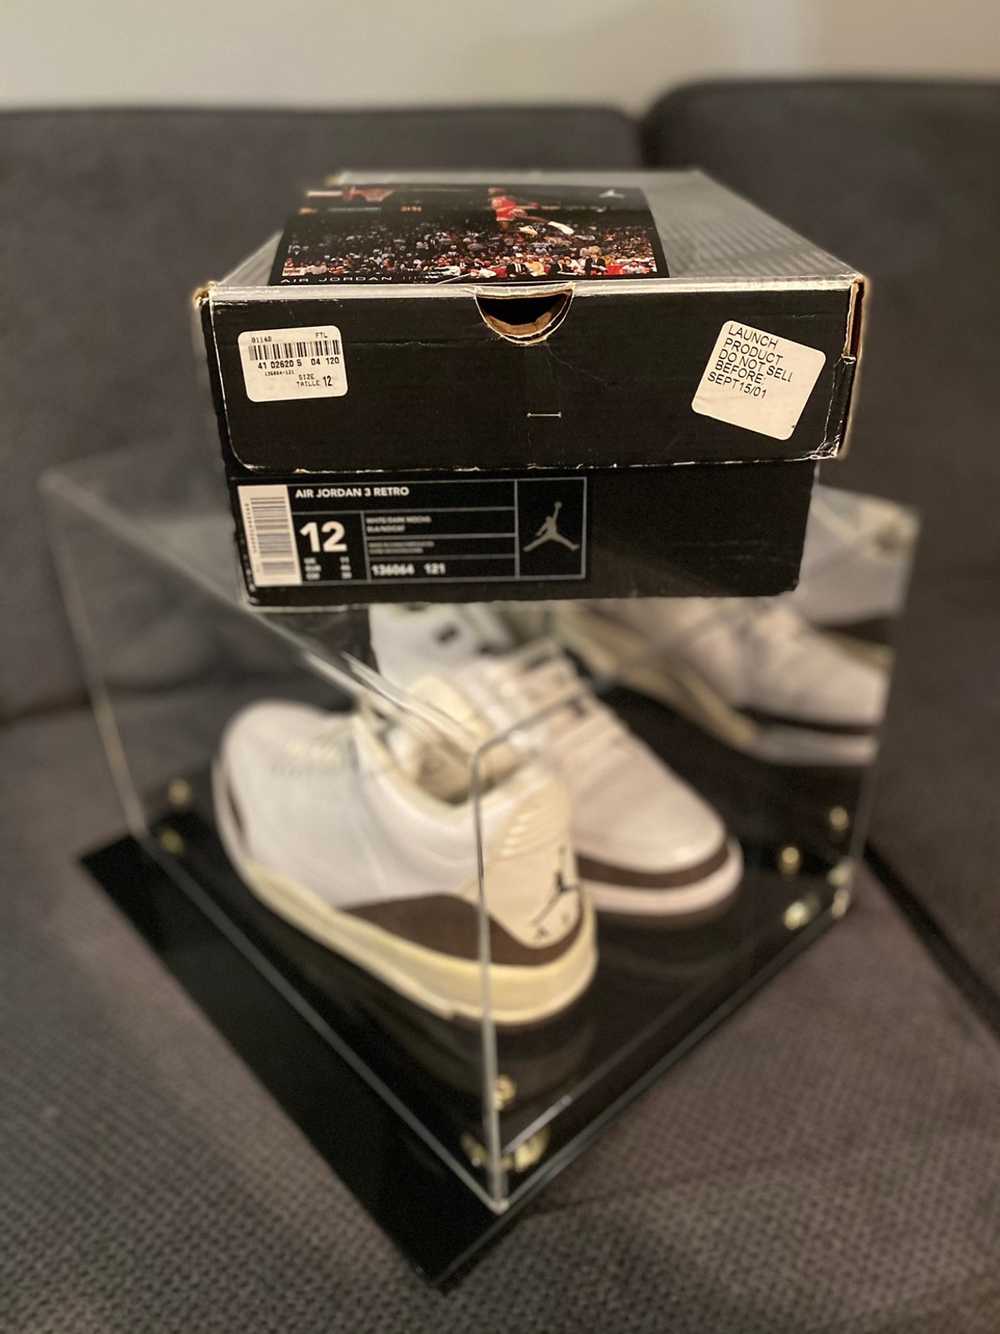 Vintage Jordan 3 mocha 2001 - size 12 - image 1